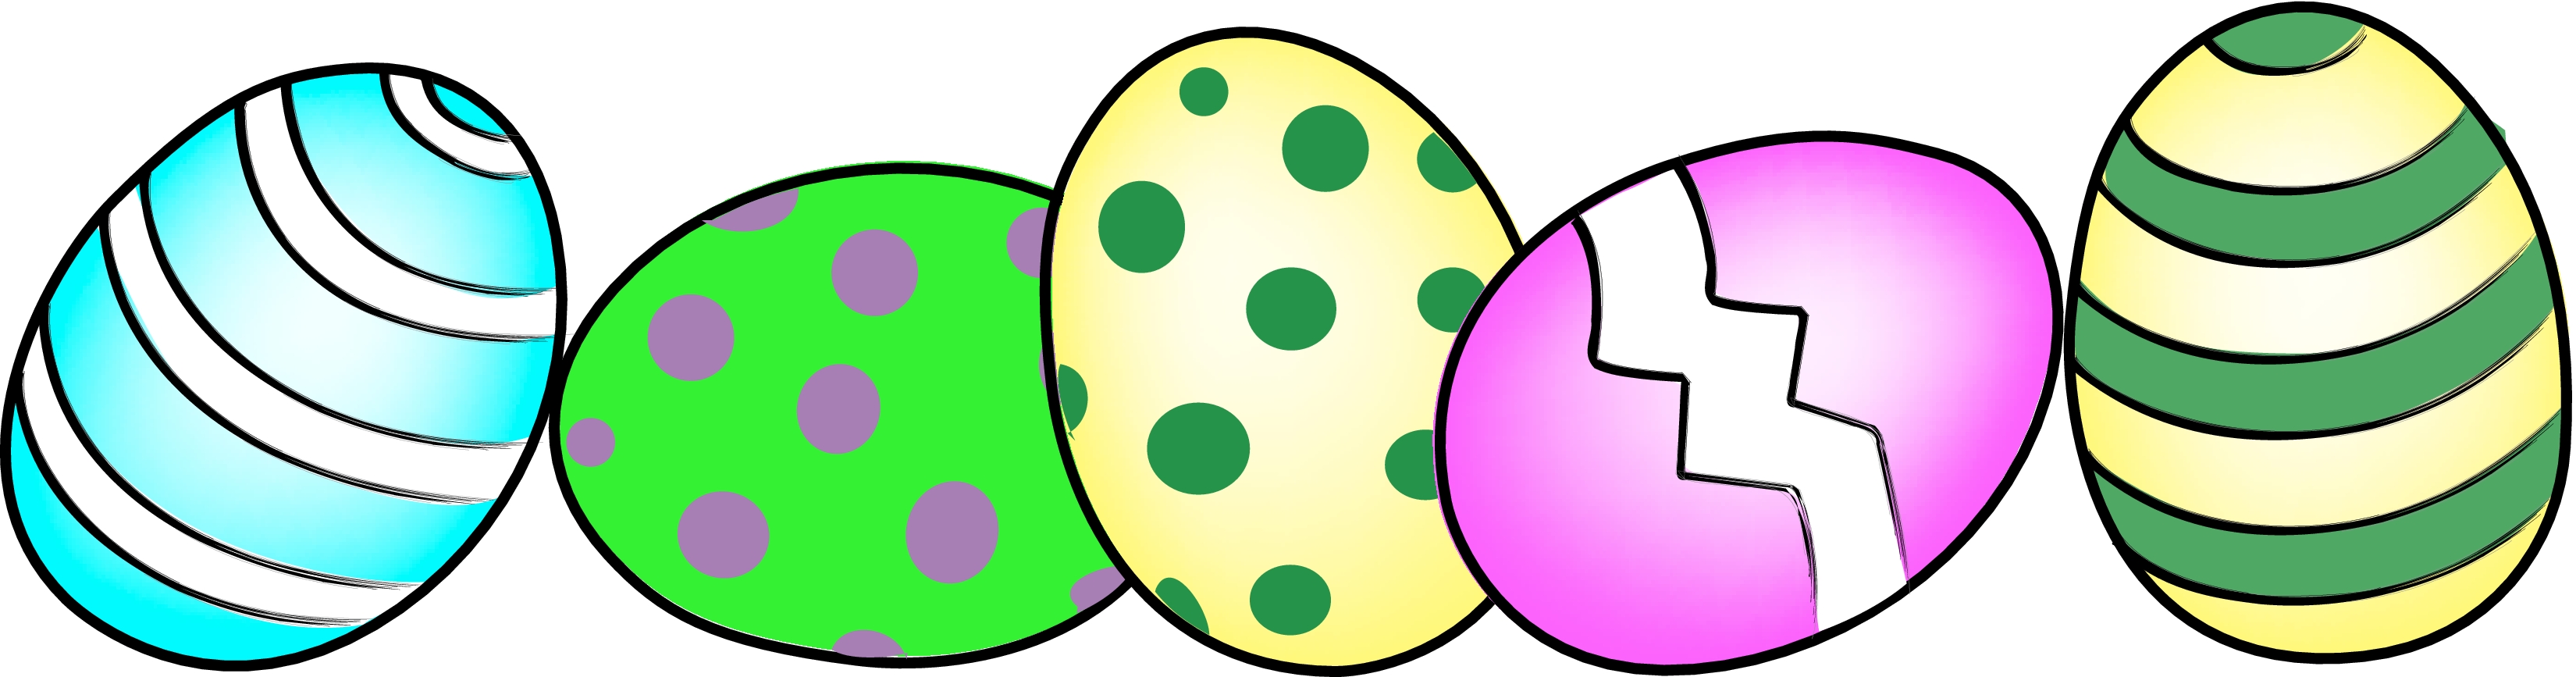 Free Egg Pastel Easter Egg Images Clipart